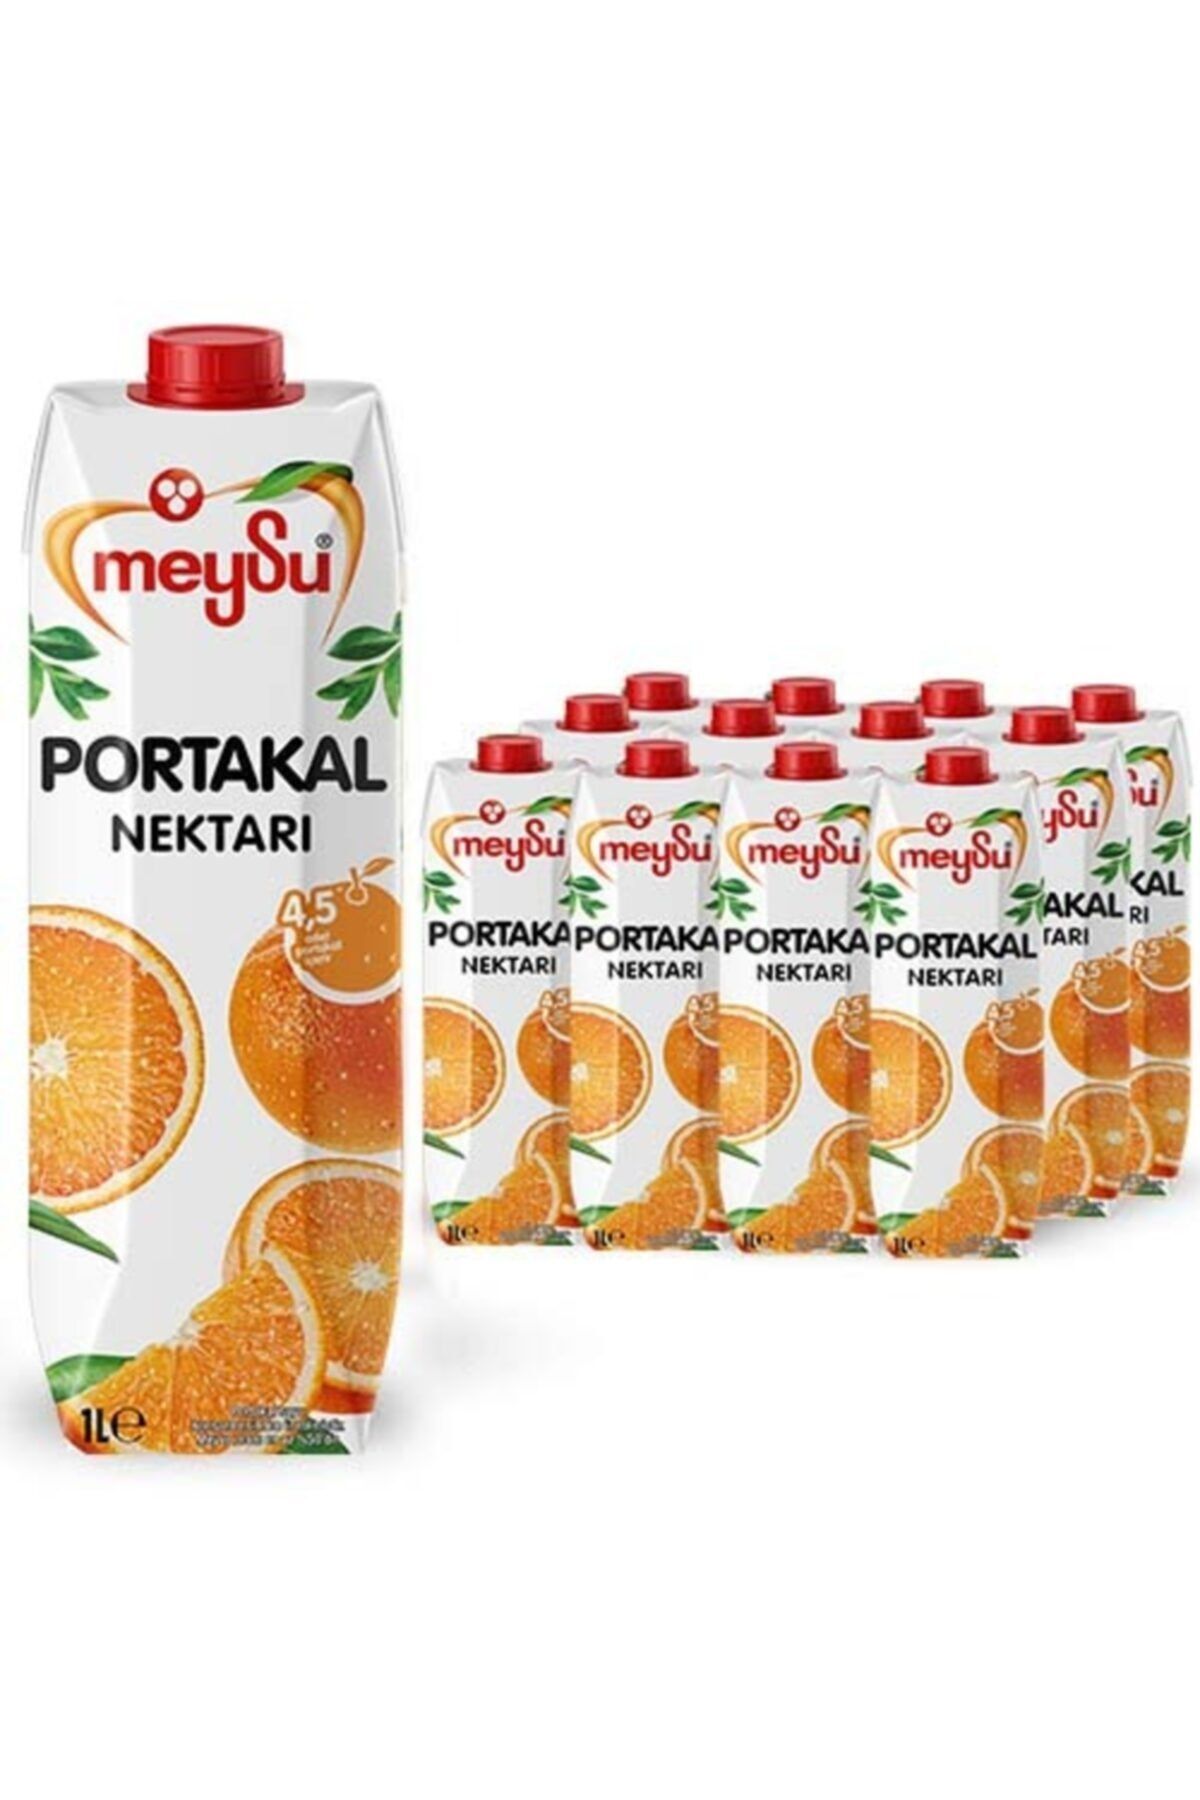 Meysu Portakal Nektarı Meyve Suyu 1 lt 12'li Paket